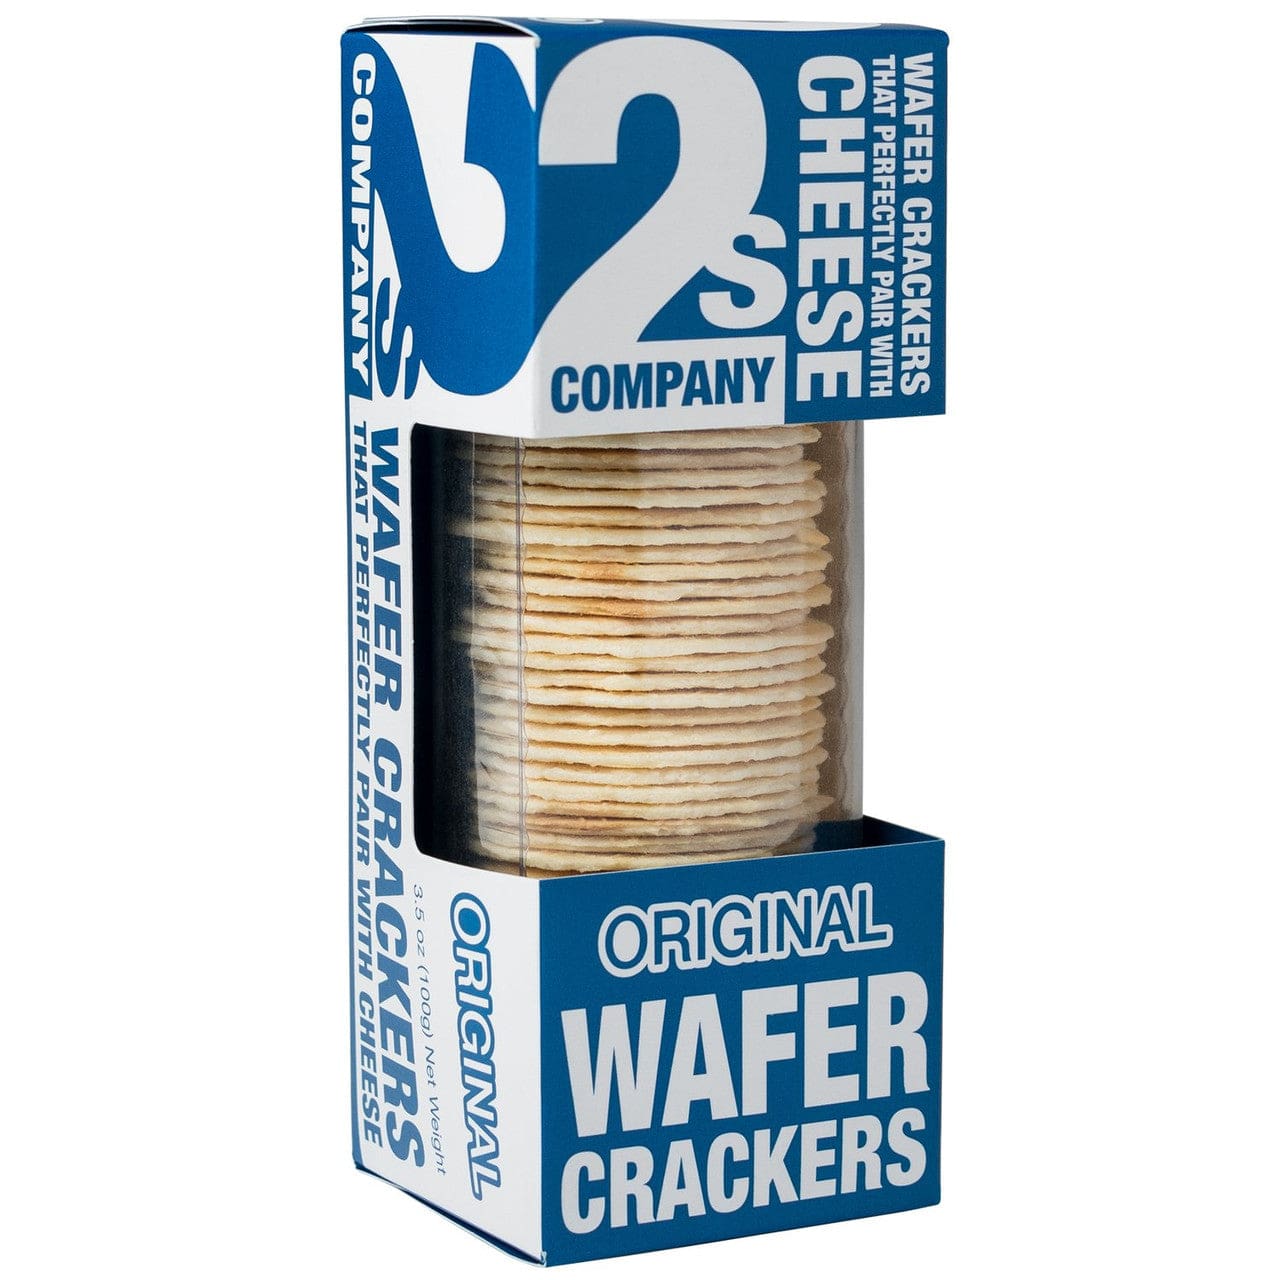 Crackers 2S Company Original Wafer Crackers 3.5oz